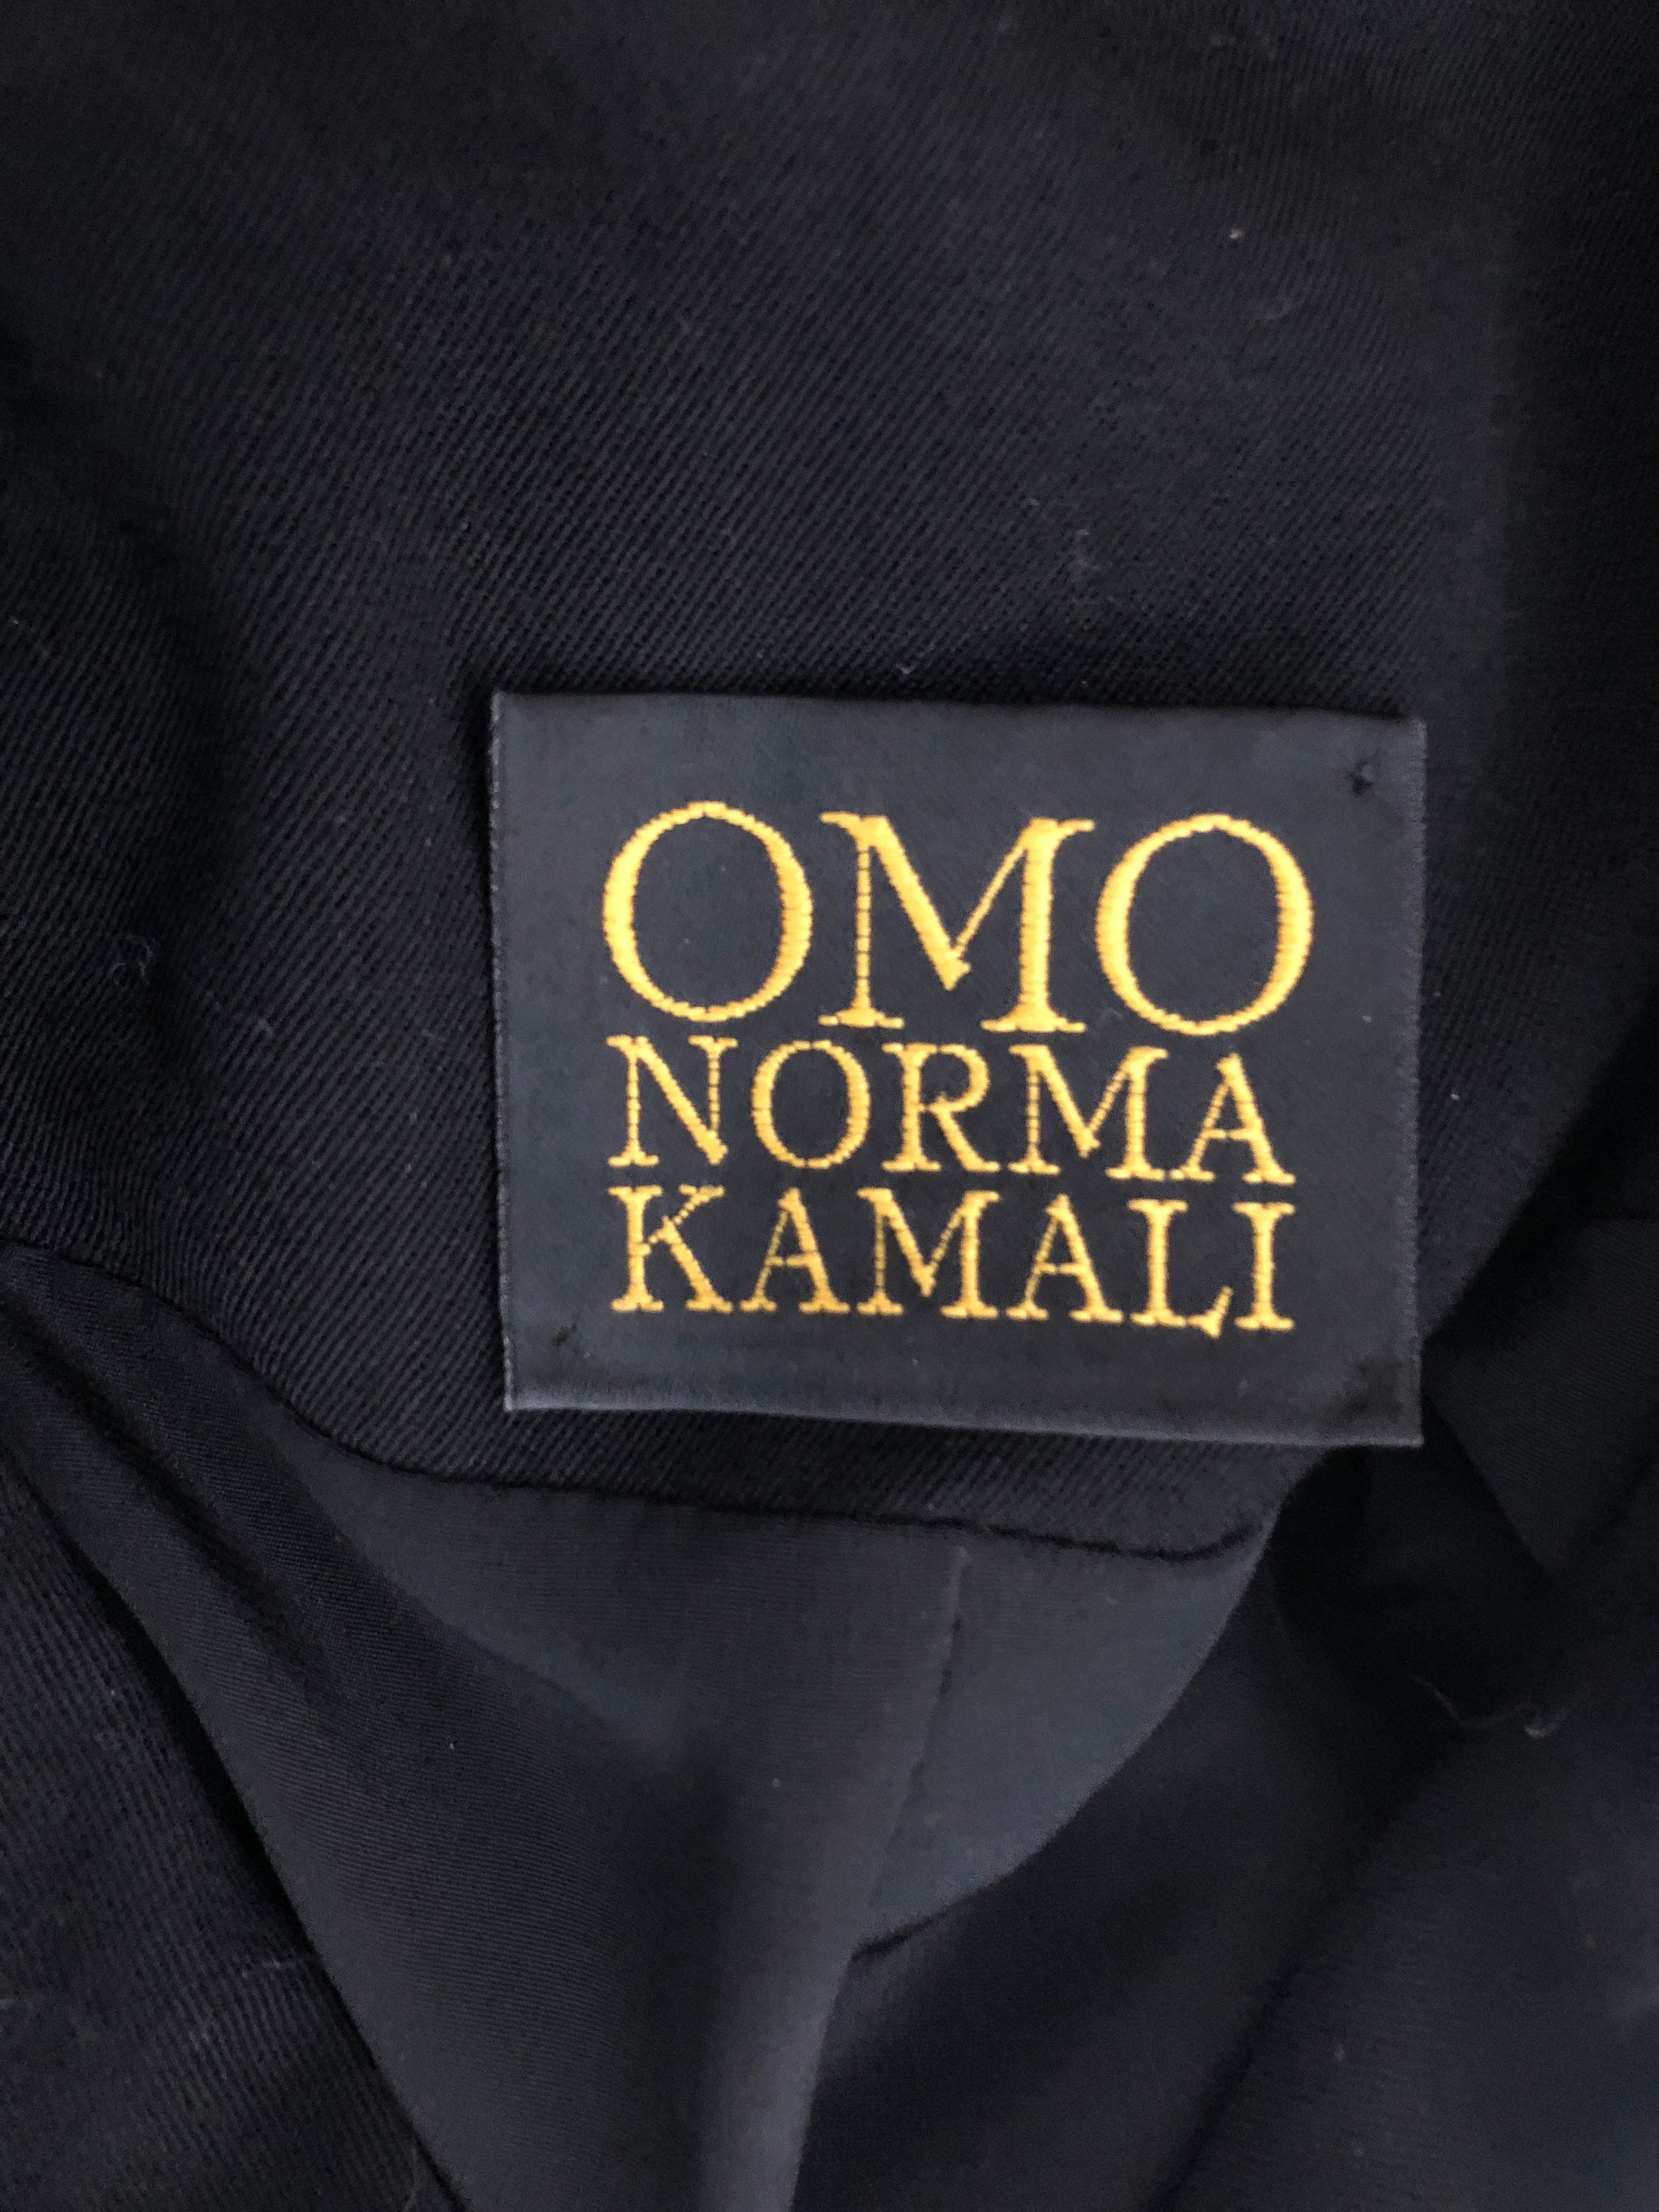 80s Norma Kamali Omo military dress jacket / vintage 1980s black star ...